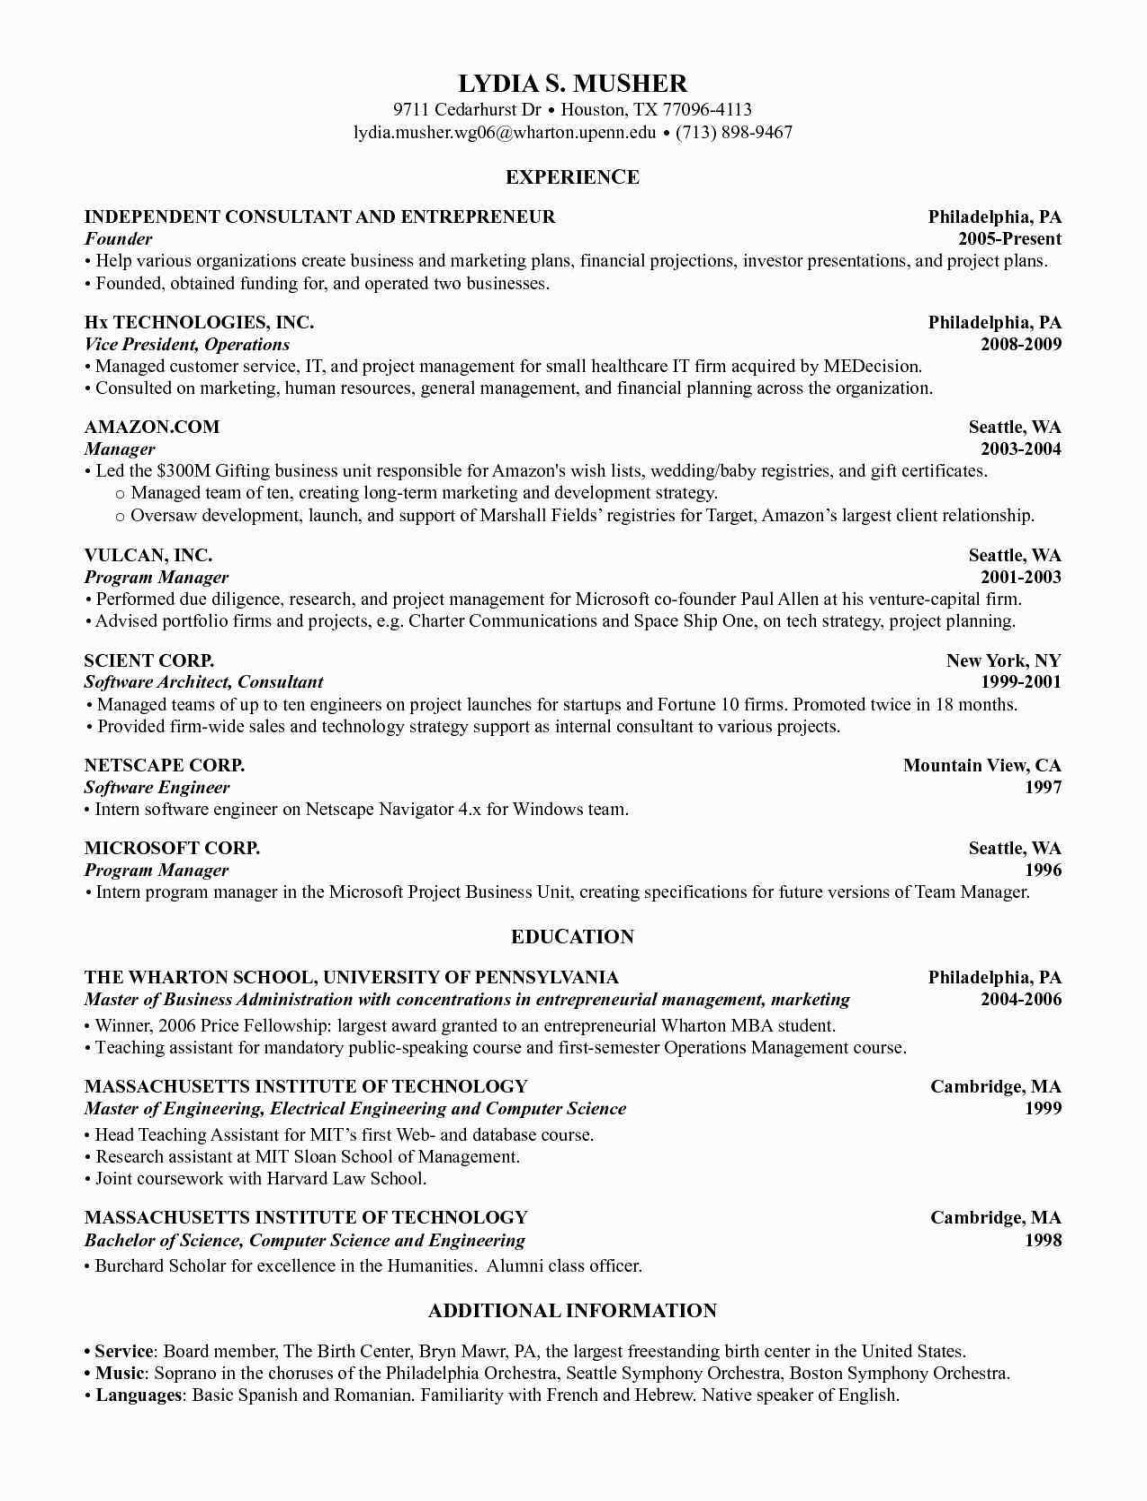 Cv Template Harvard - Resume Format  Business resume template